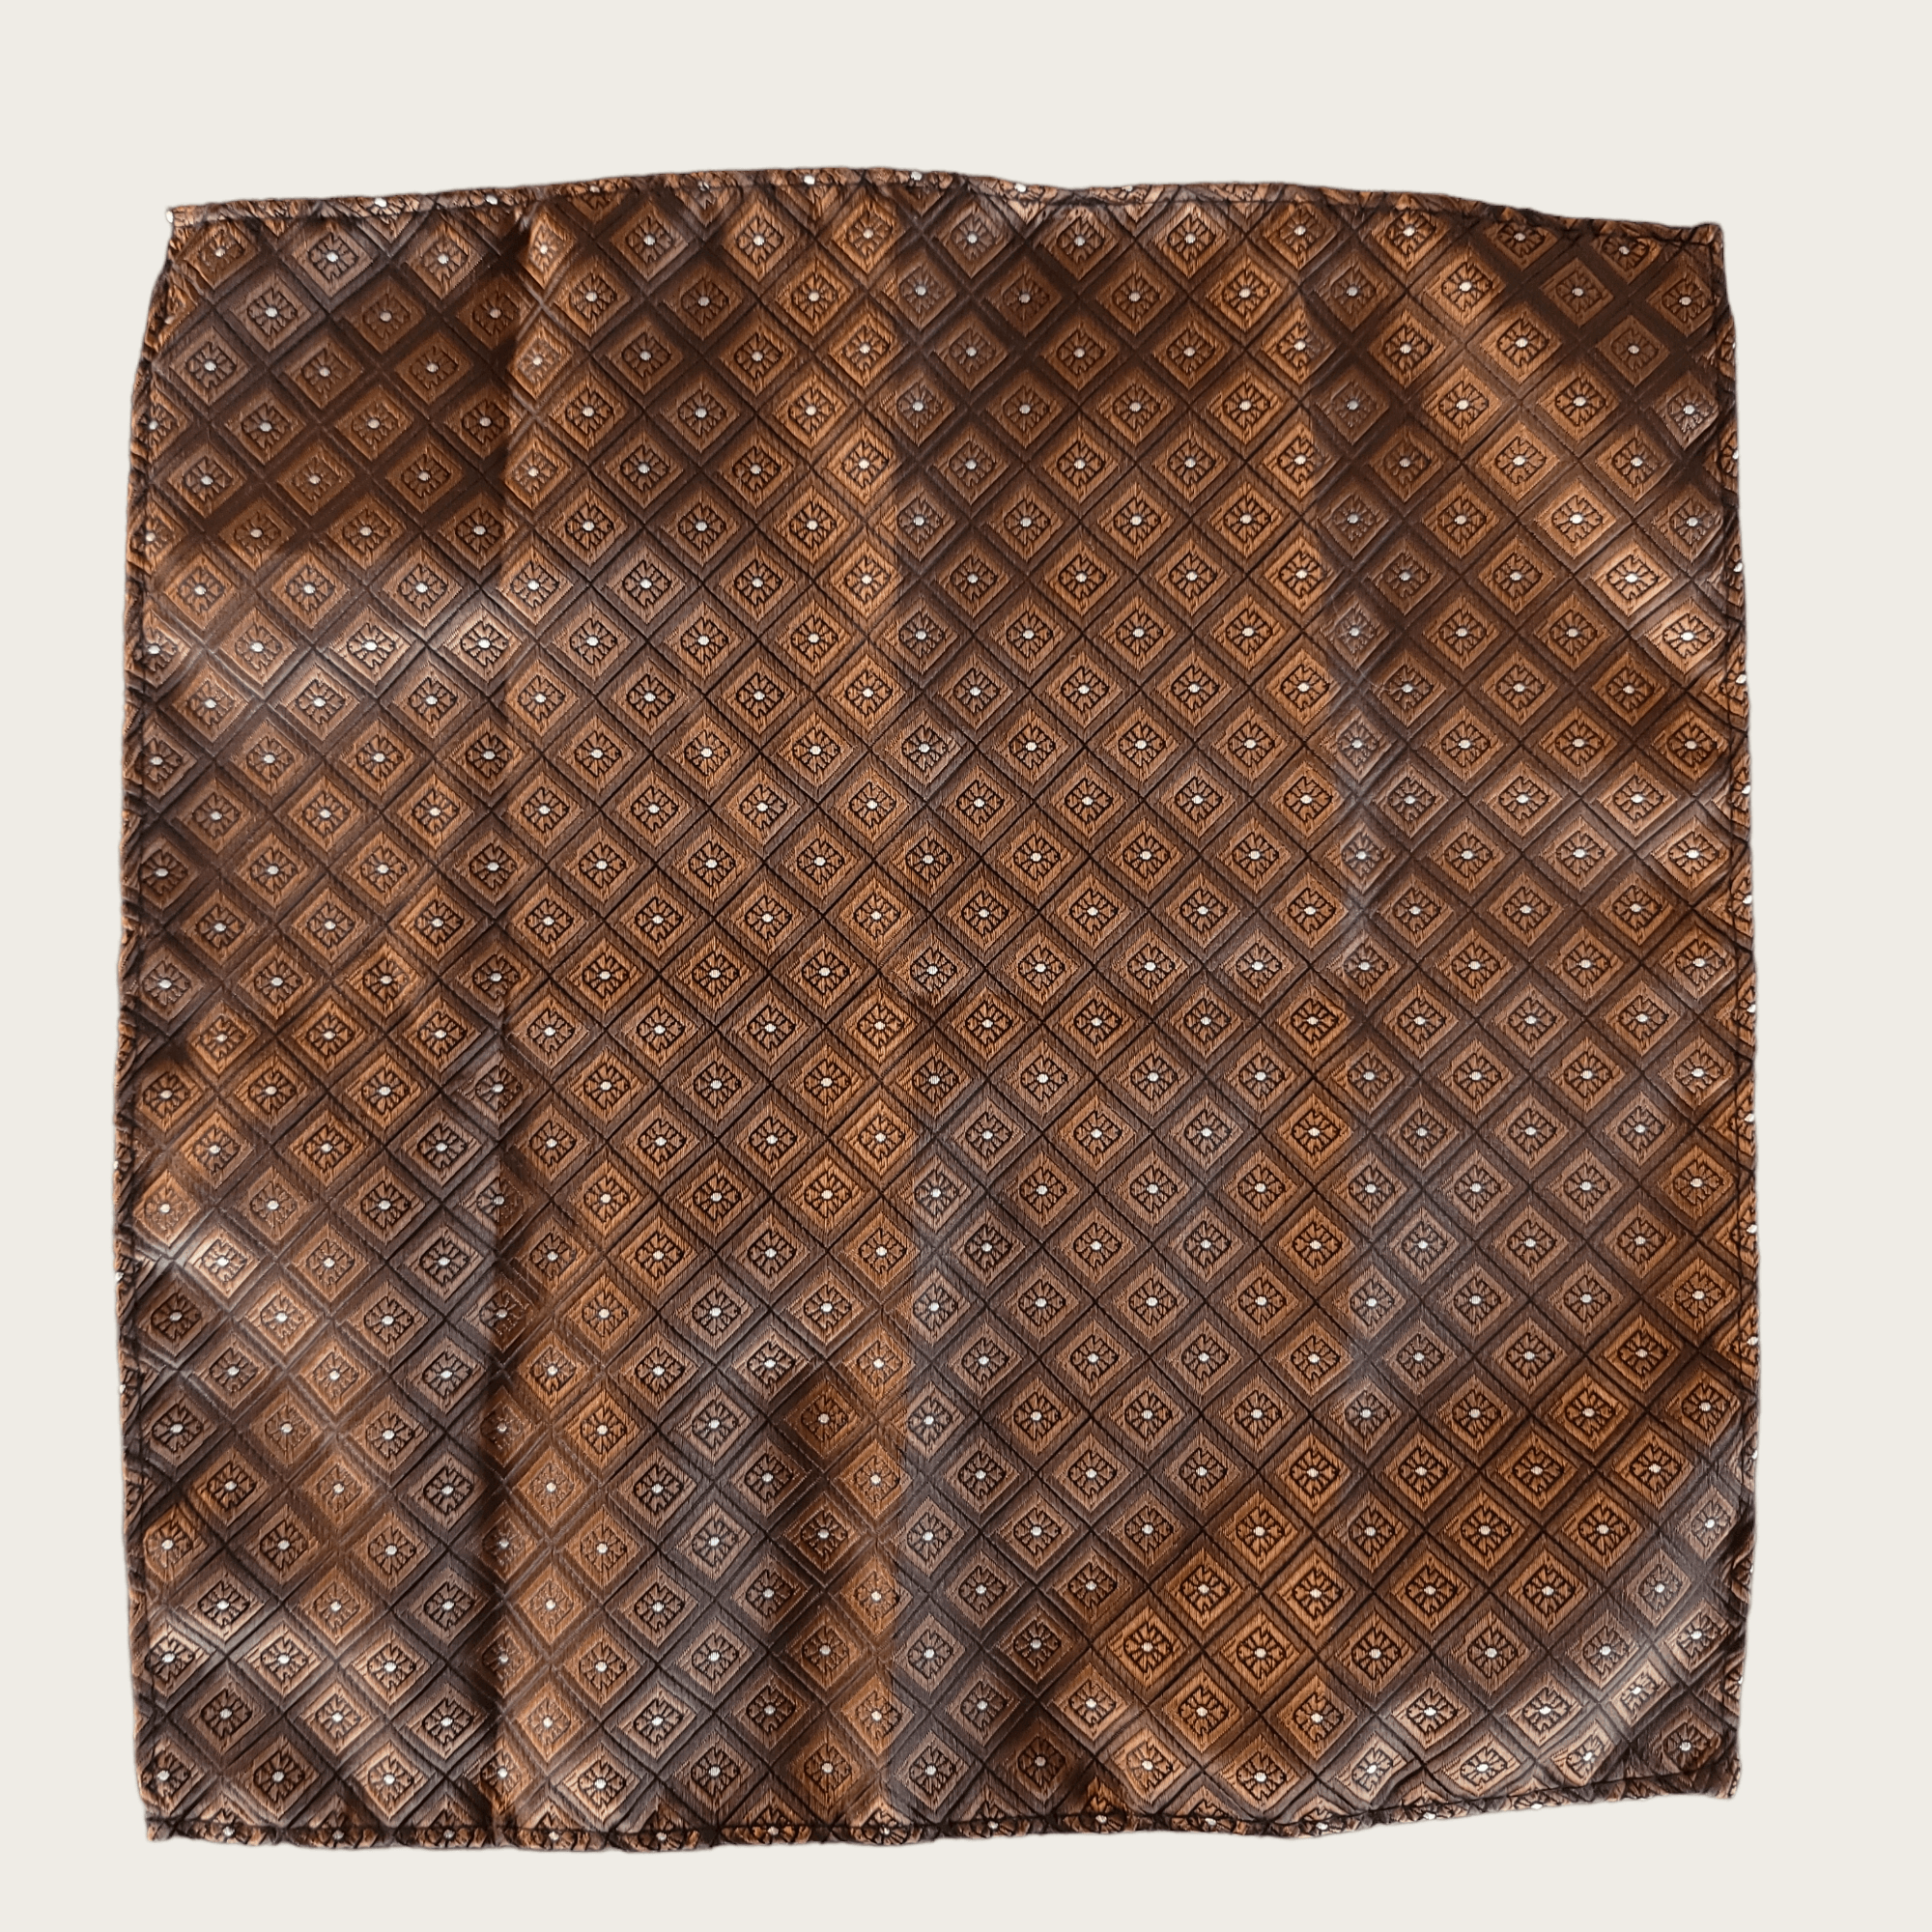 Brown Plaid Silk Tie Pocket Square Set - STYLETIE